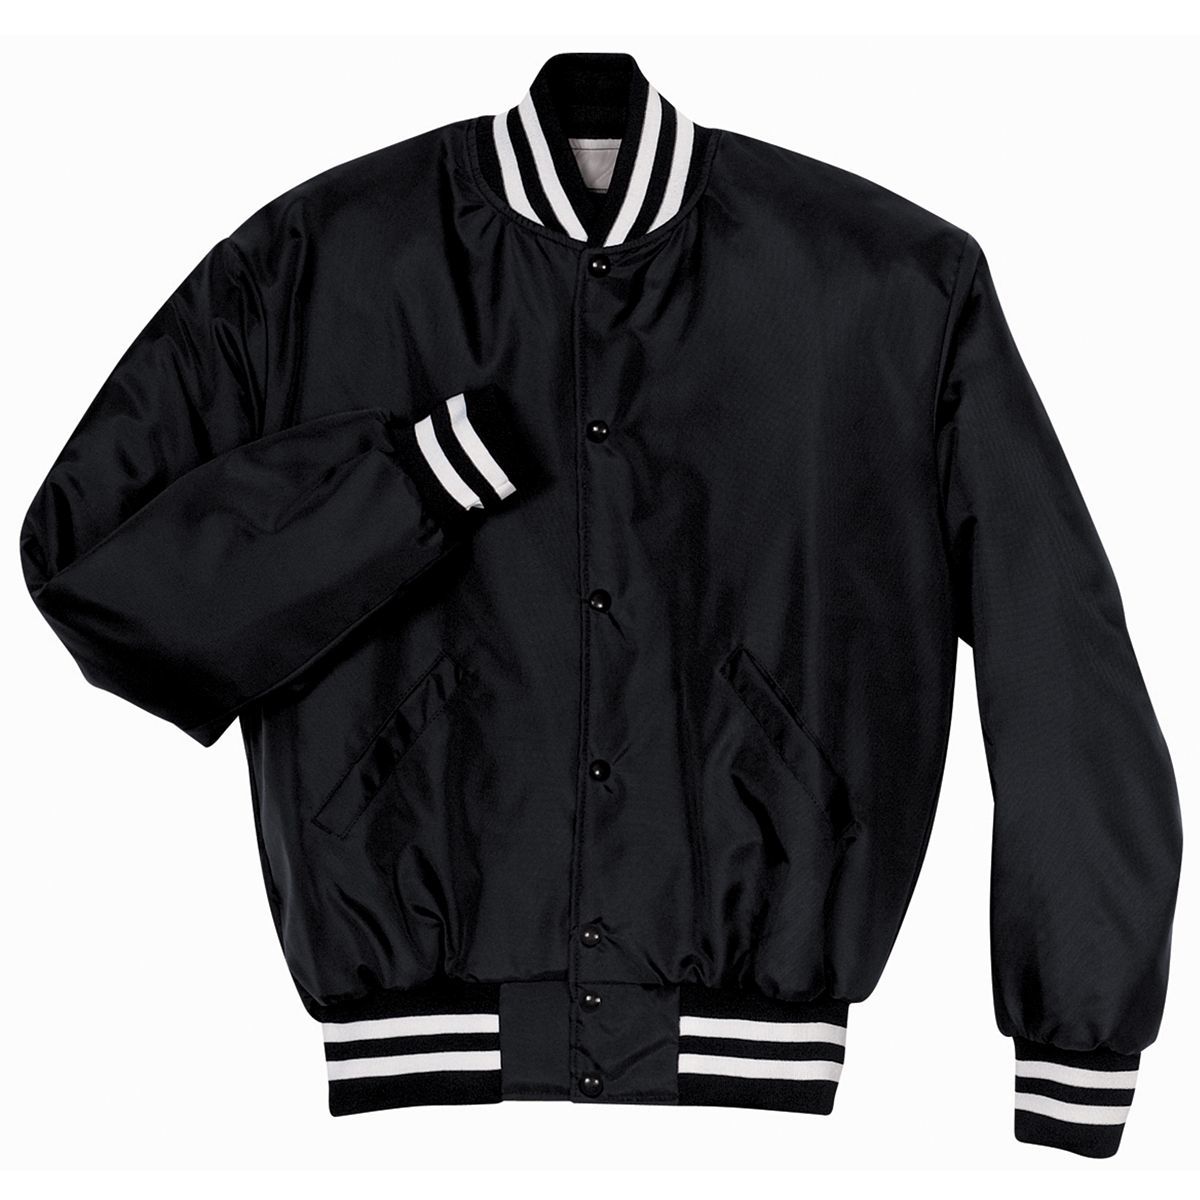 Holloway Sportswear L Heritage Jacket Black/White 229140 - image 4 of 4